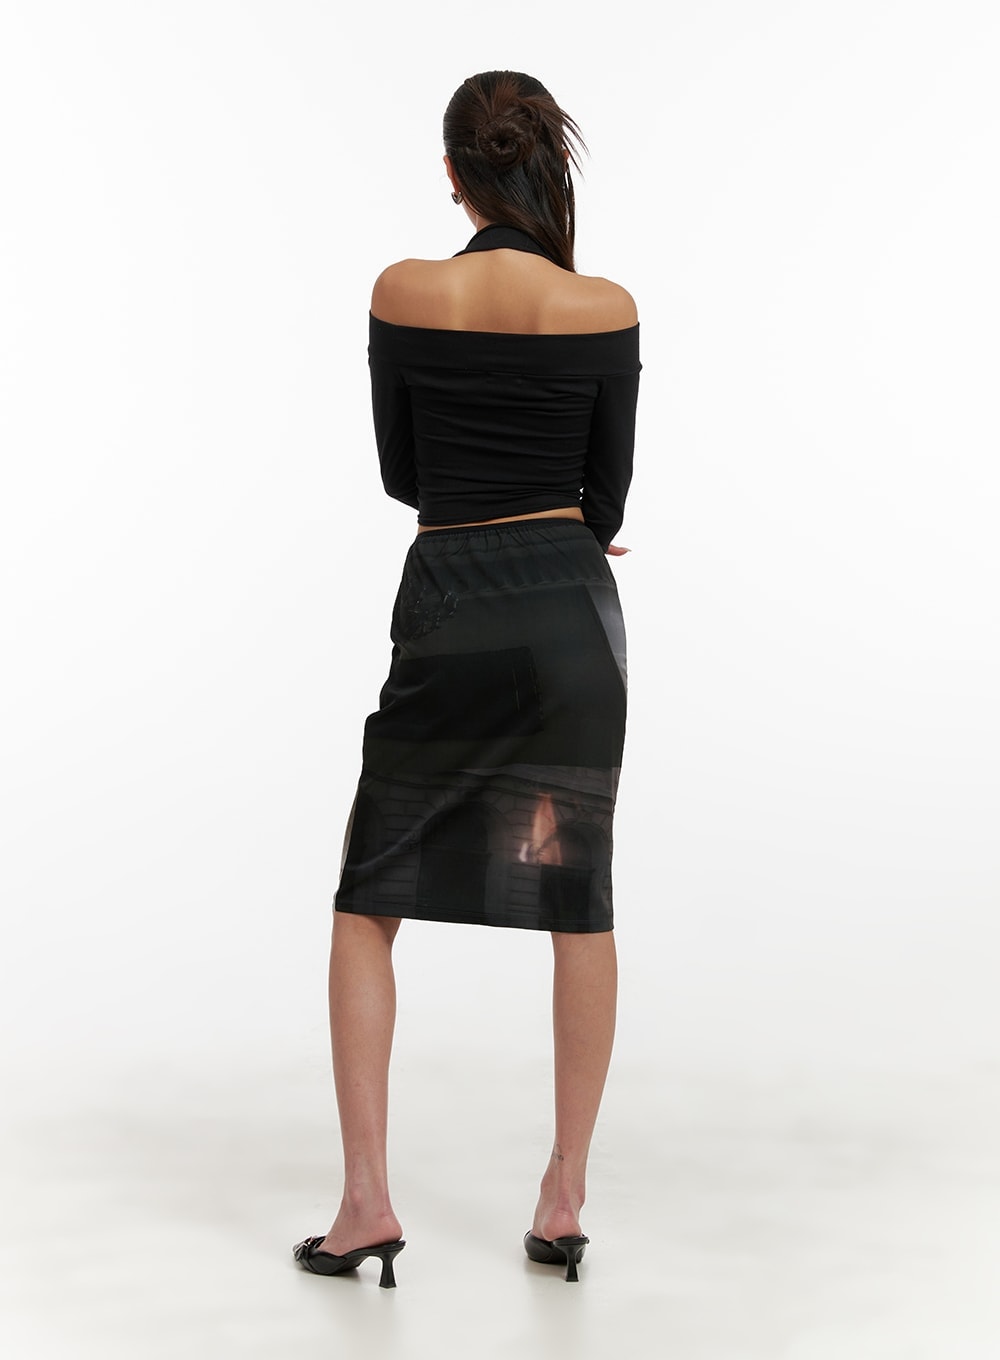 graphic-print-midi-skirt-cy402